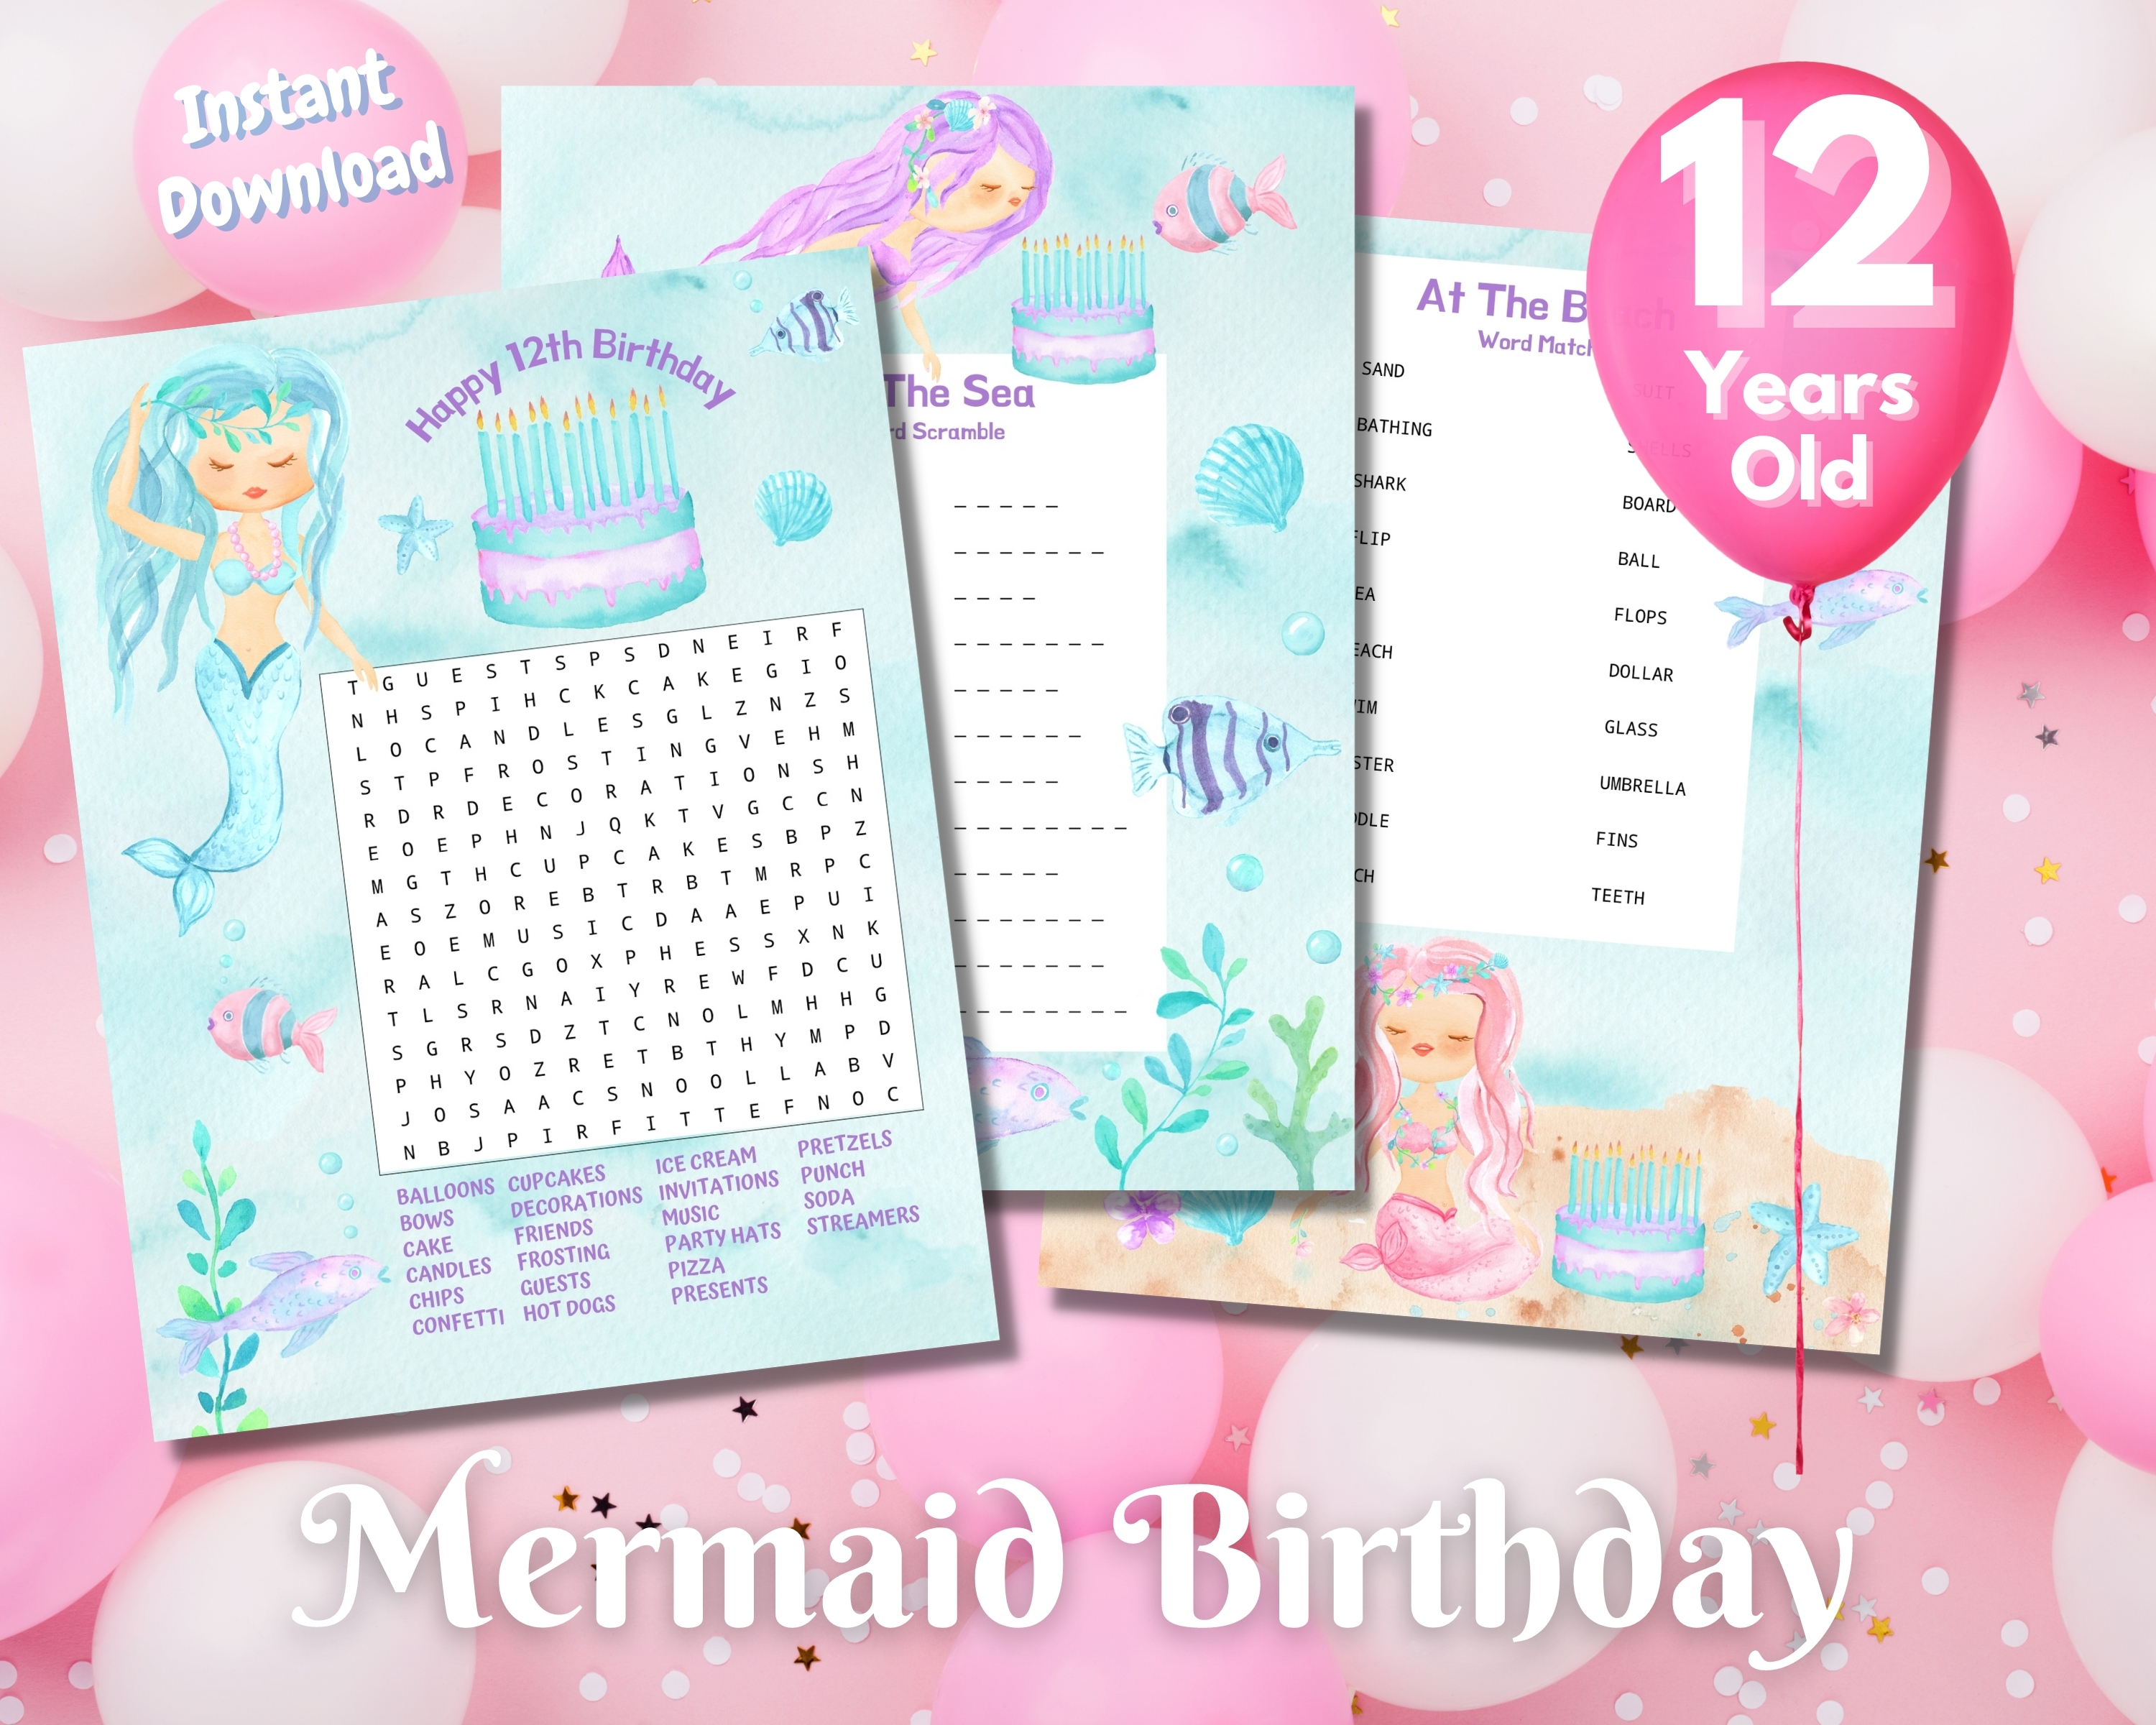 Twelfth Mermaid Birthday Word Puzzles - Light Complexion